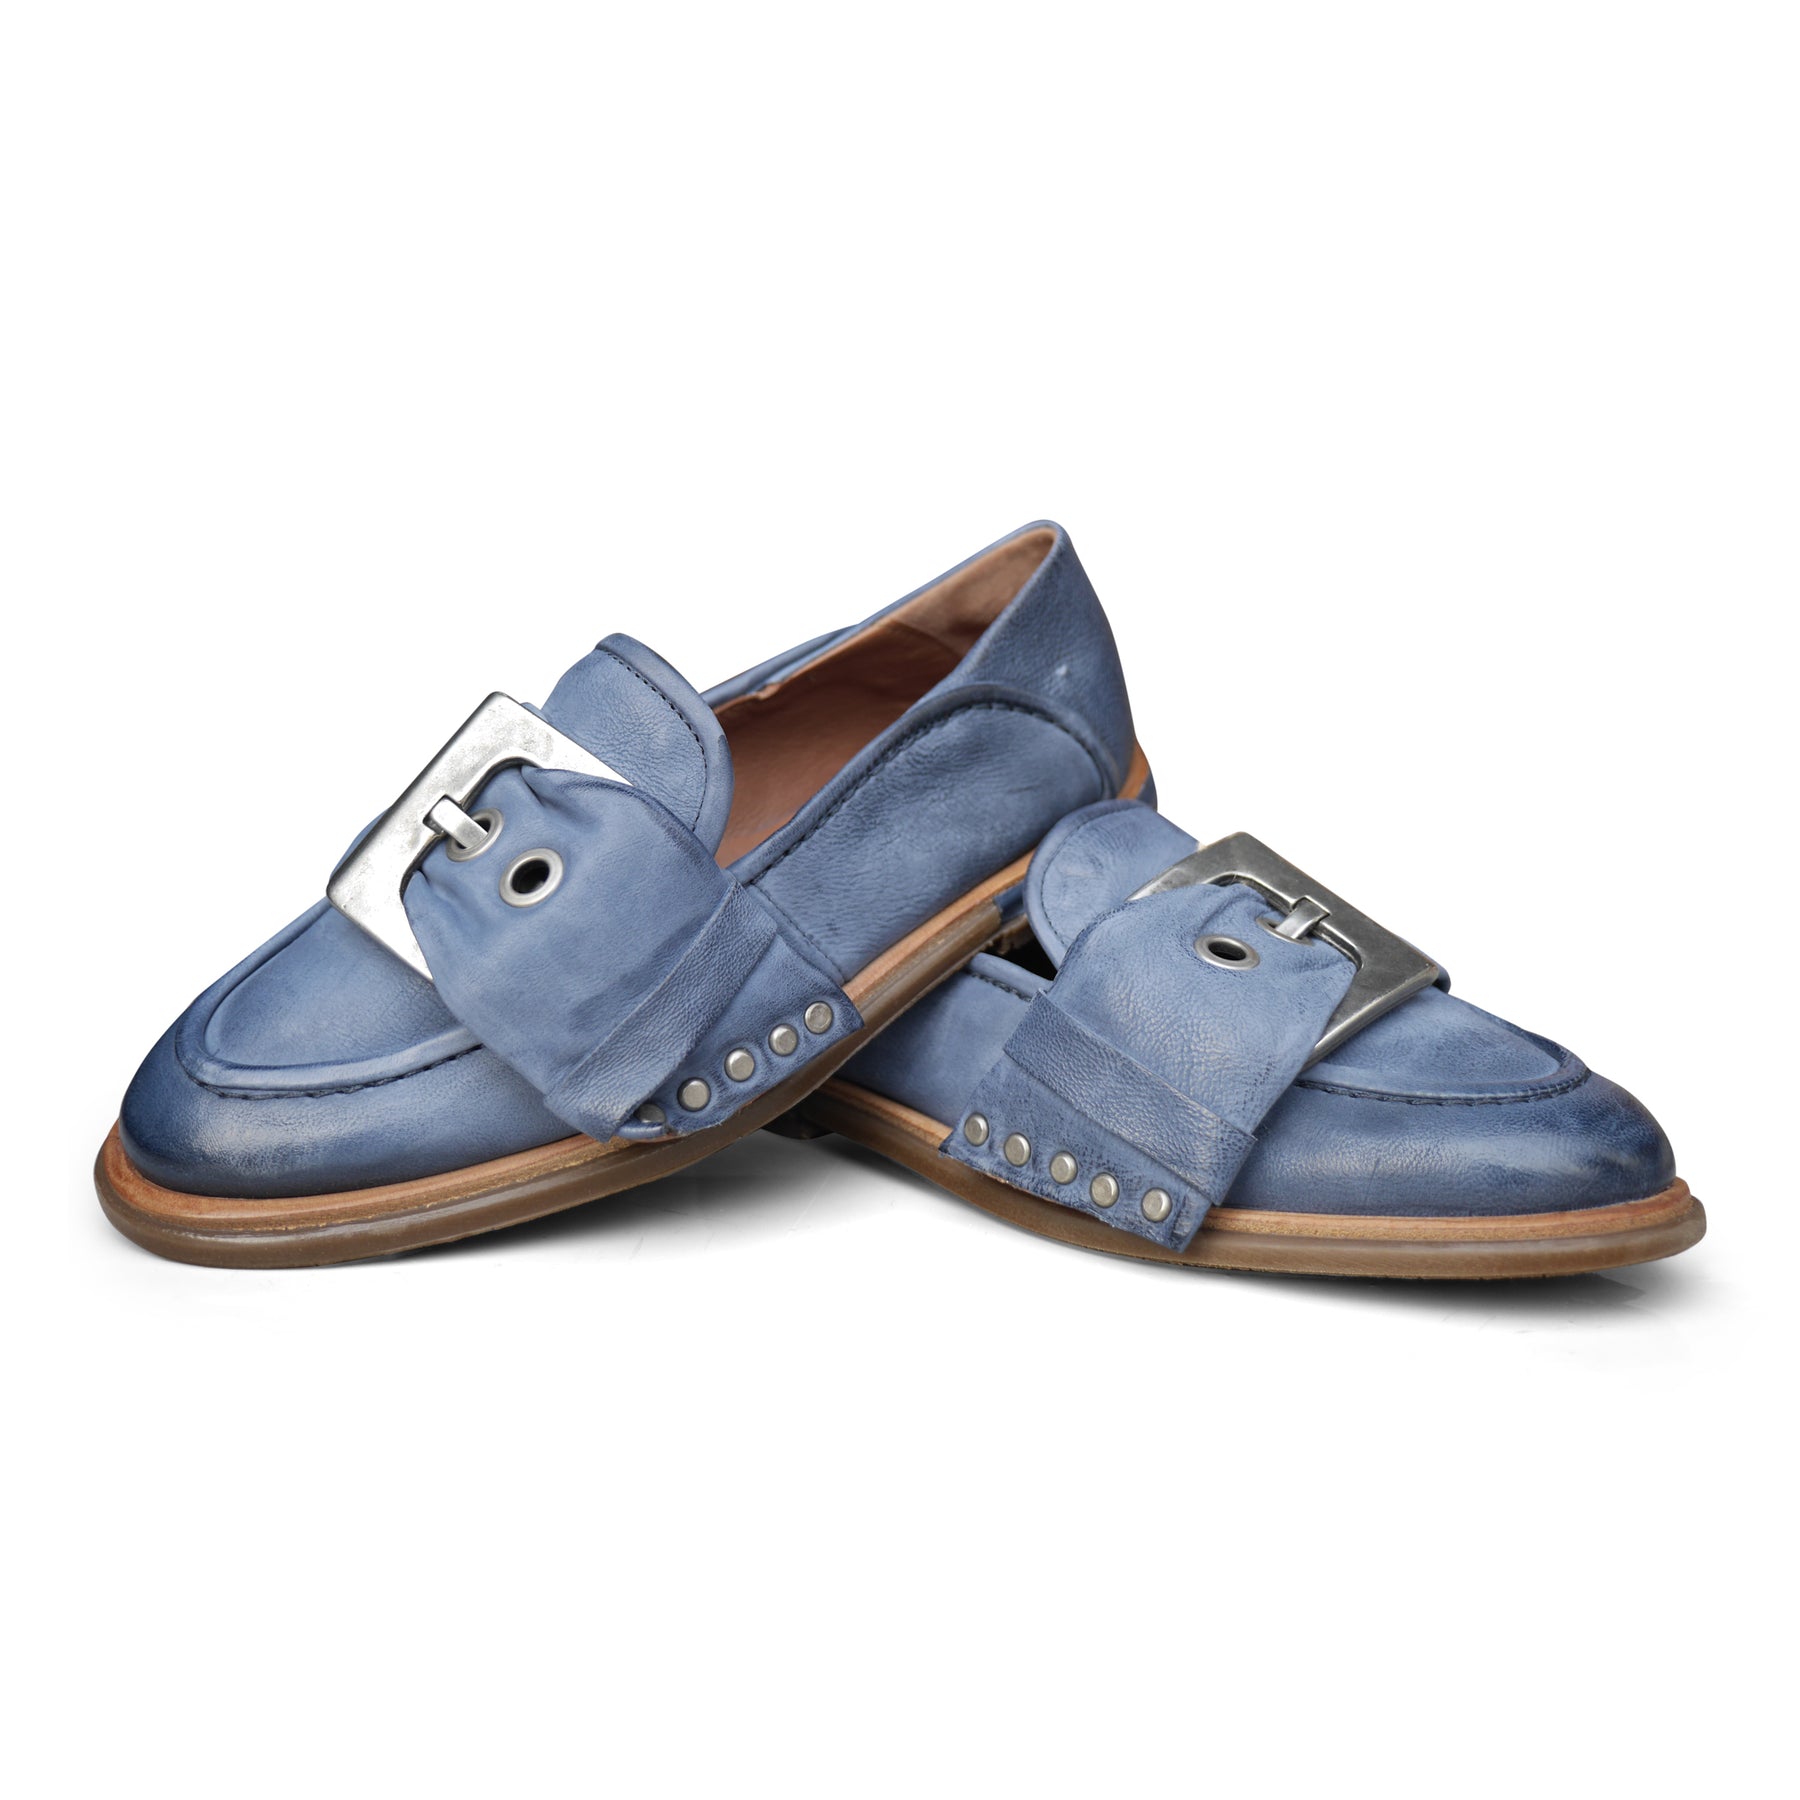 A74105 - Blue Buckled Loafer